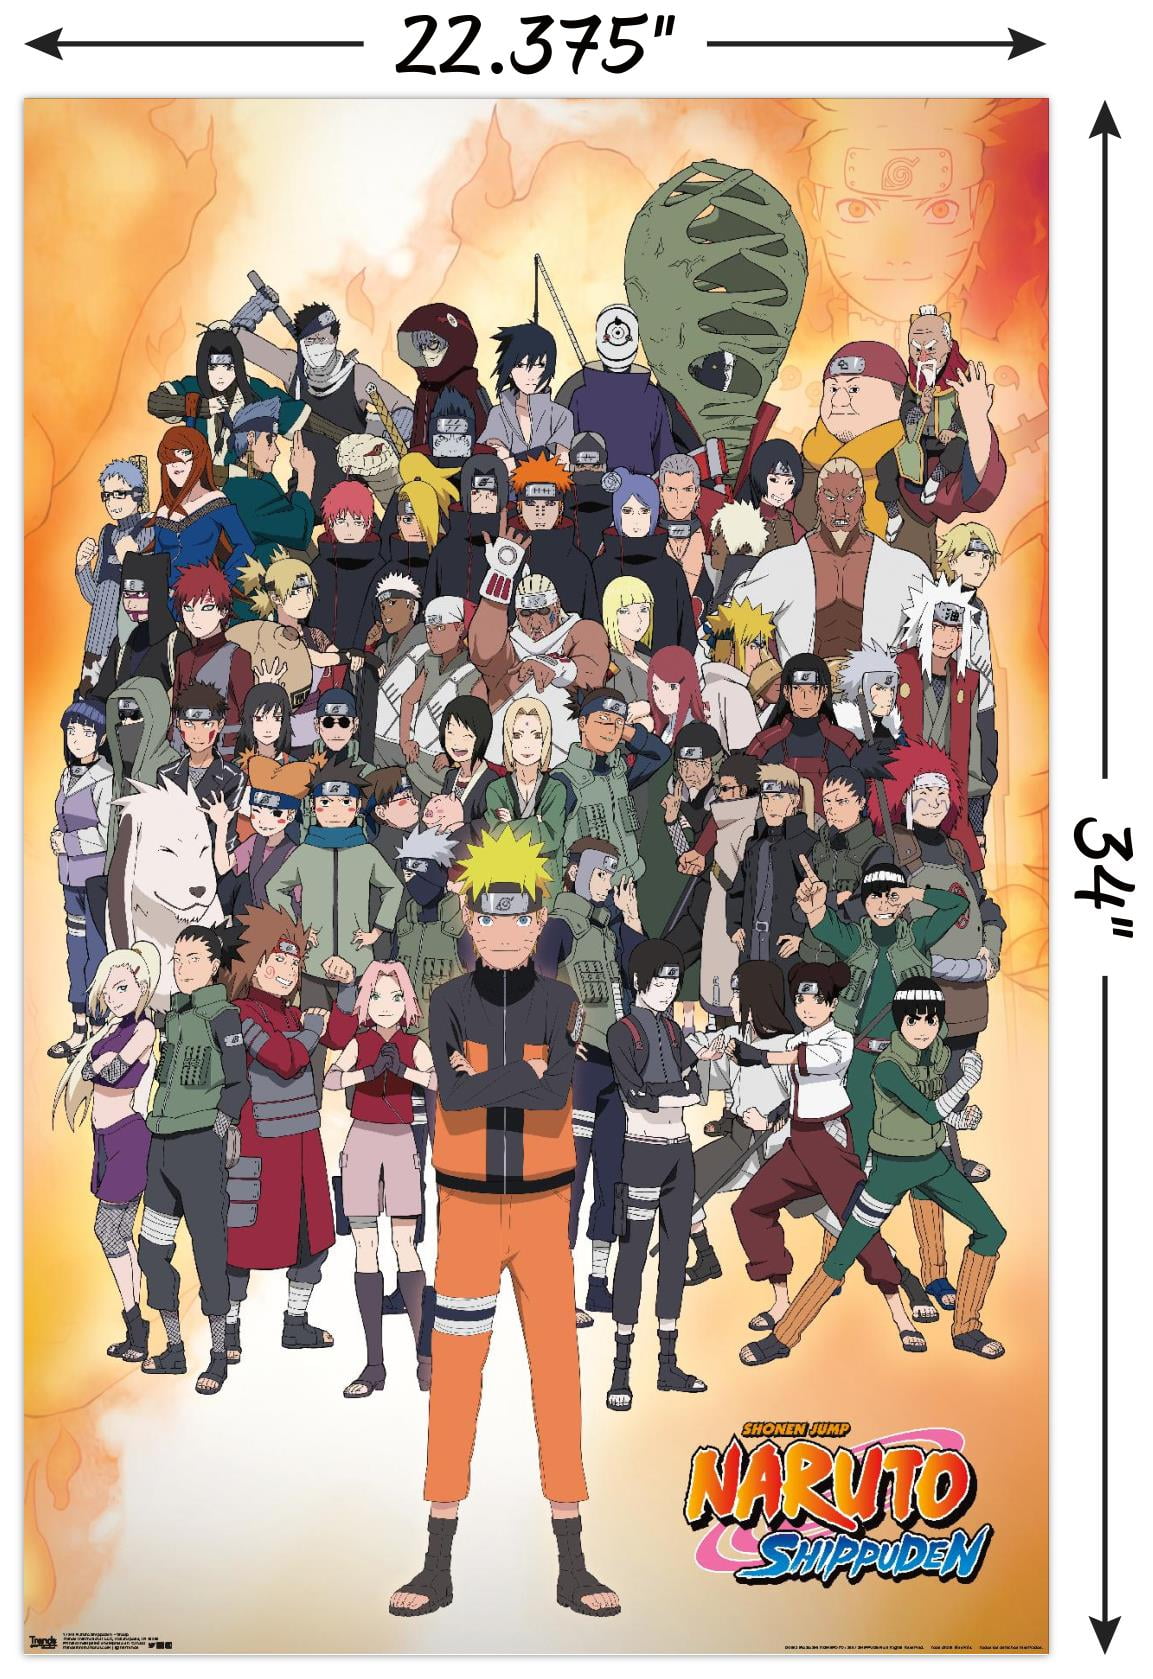 Calendrier photo 30x43cm format A3 Naruto Chibi Group